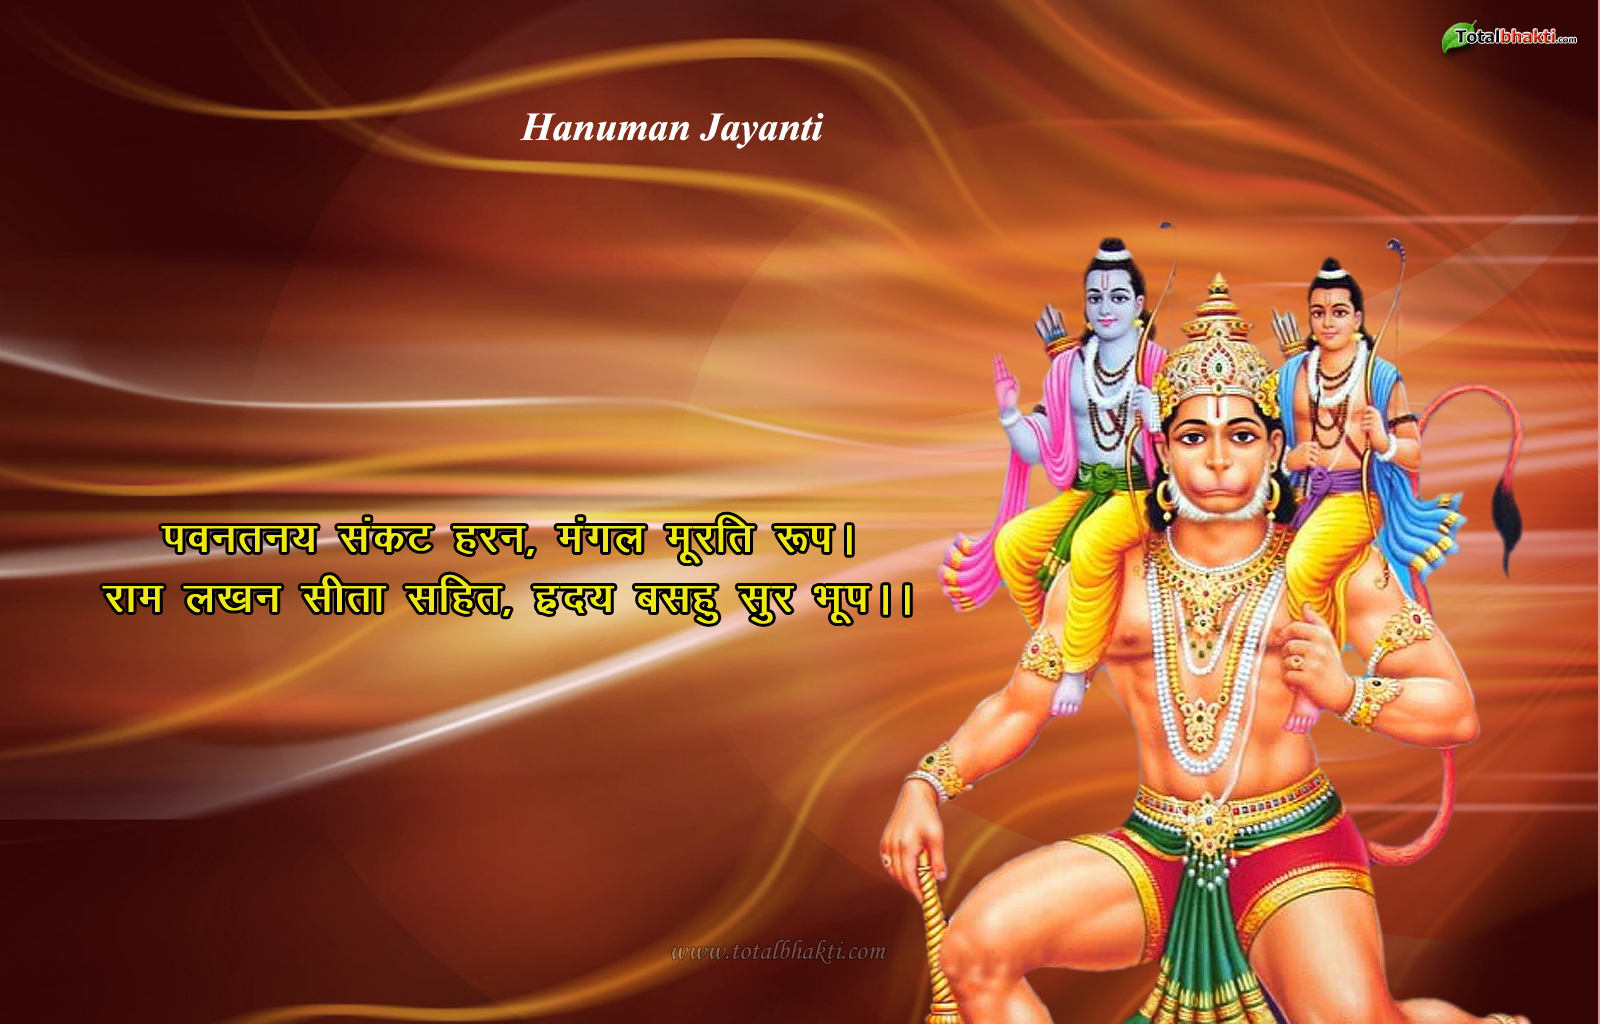 Download Best Hanuman Jayanti Powerful Windows Mac Wallpaper ...